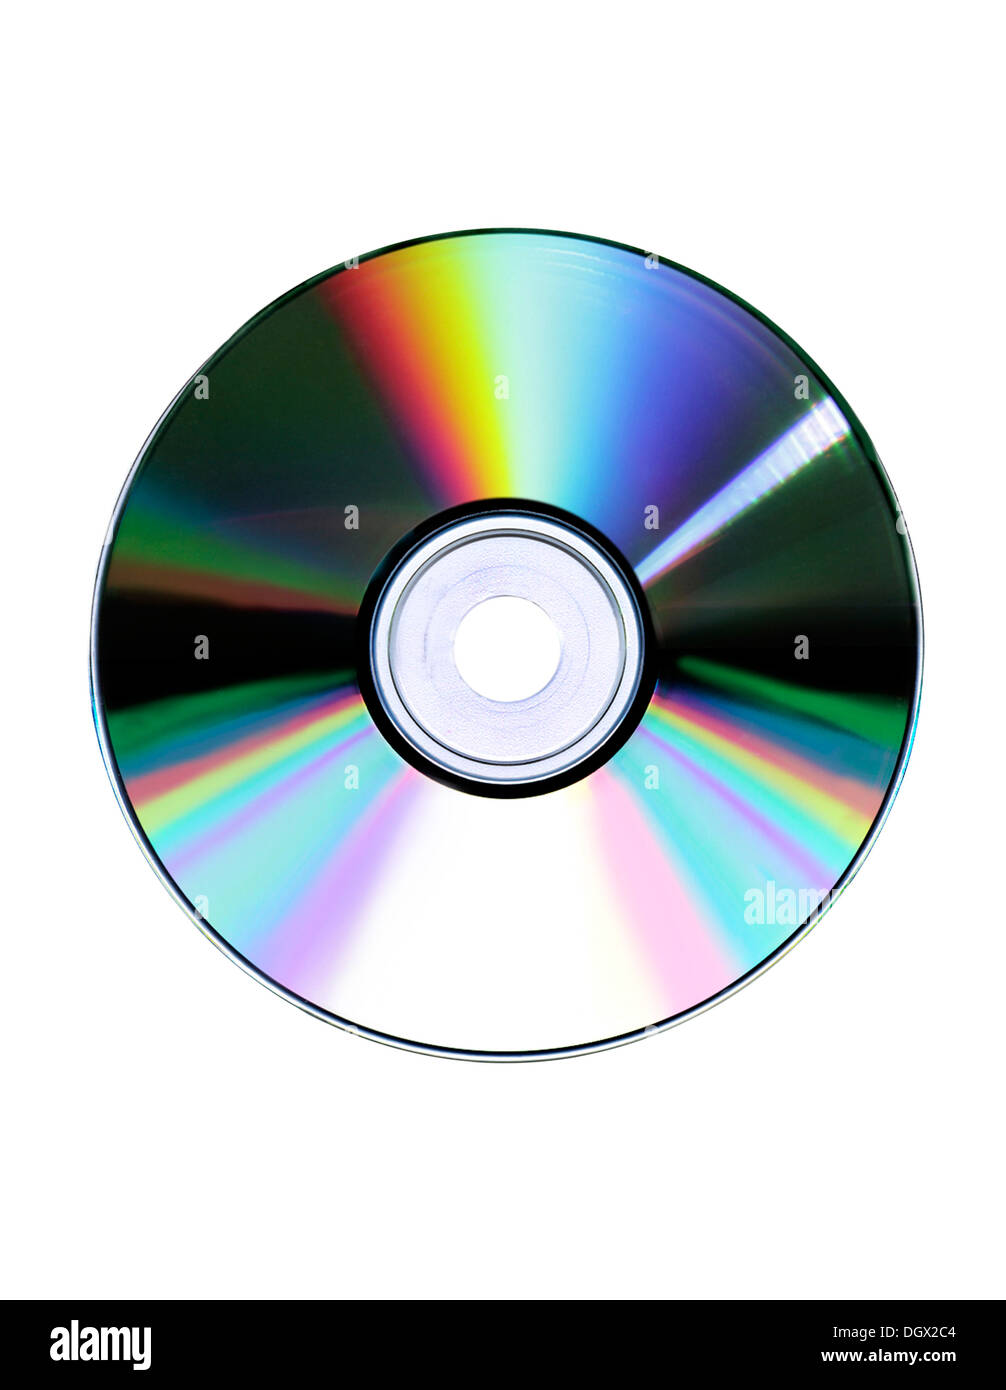 Iridato colorati CD vuoto Foto stock - Alamy